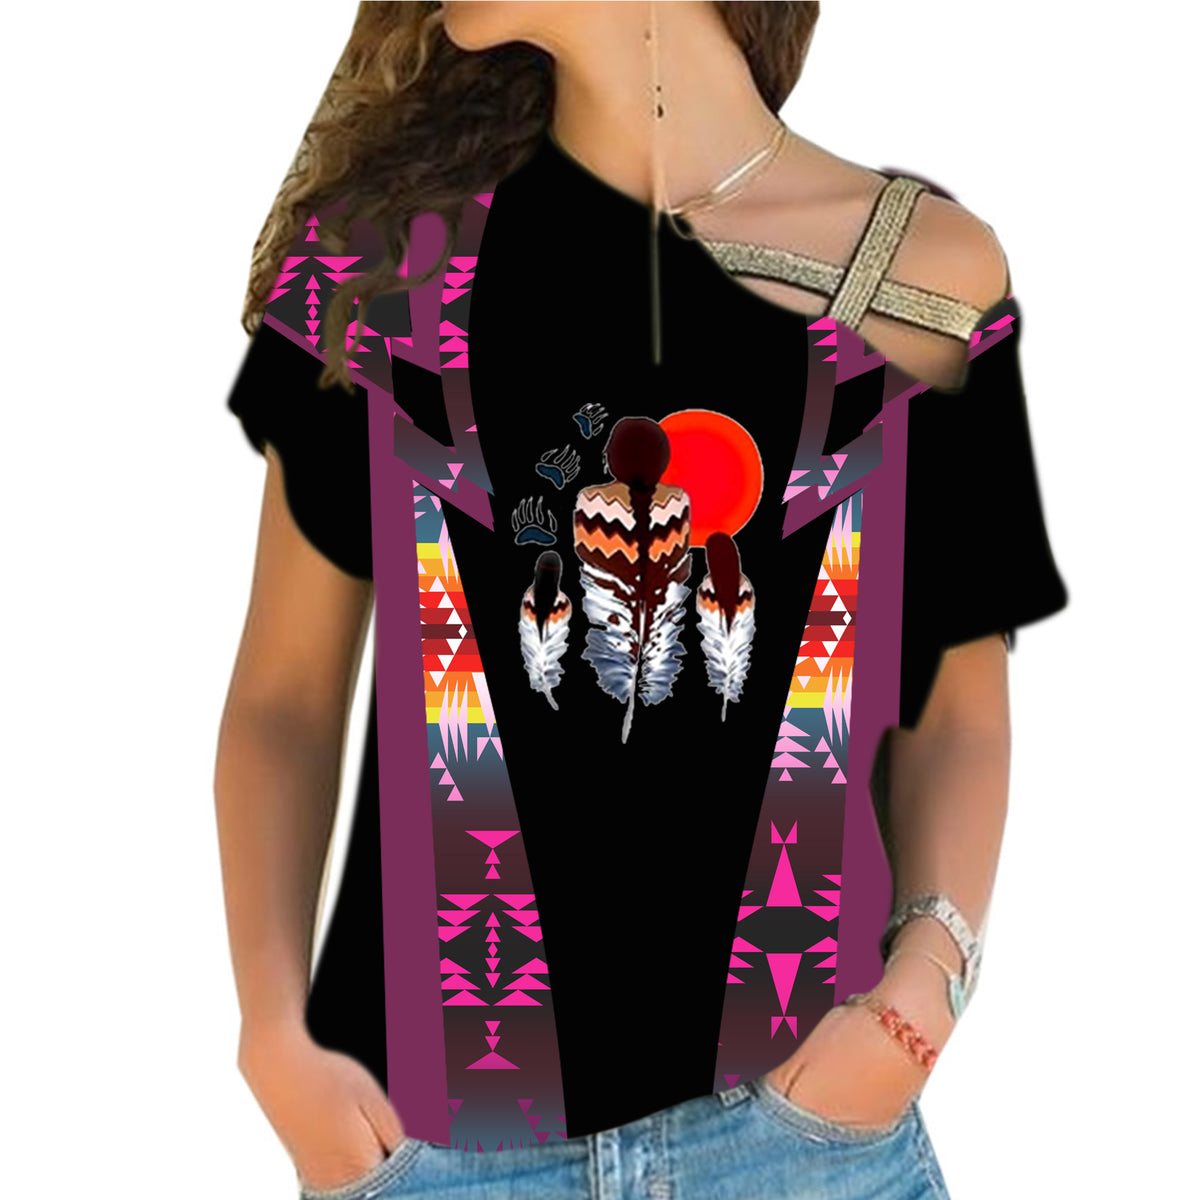 Powwow StoreCRS0001204 Native American Cross Shoulder Shirt